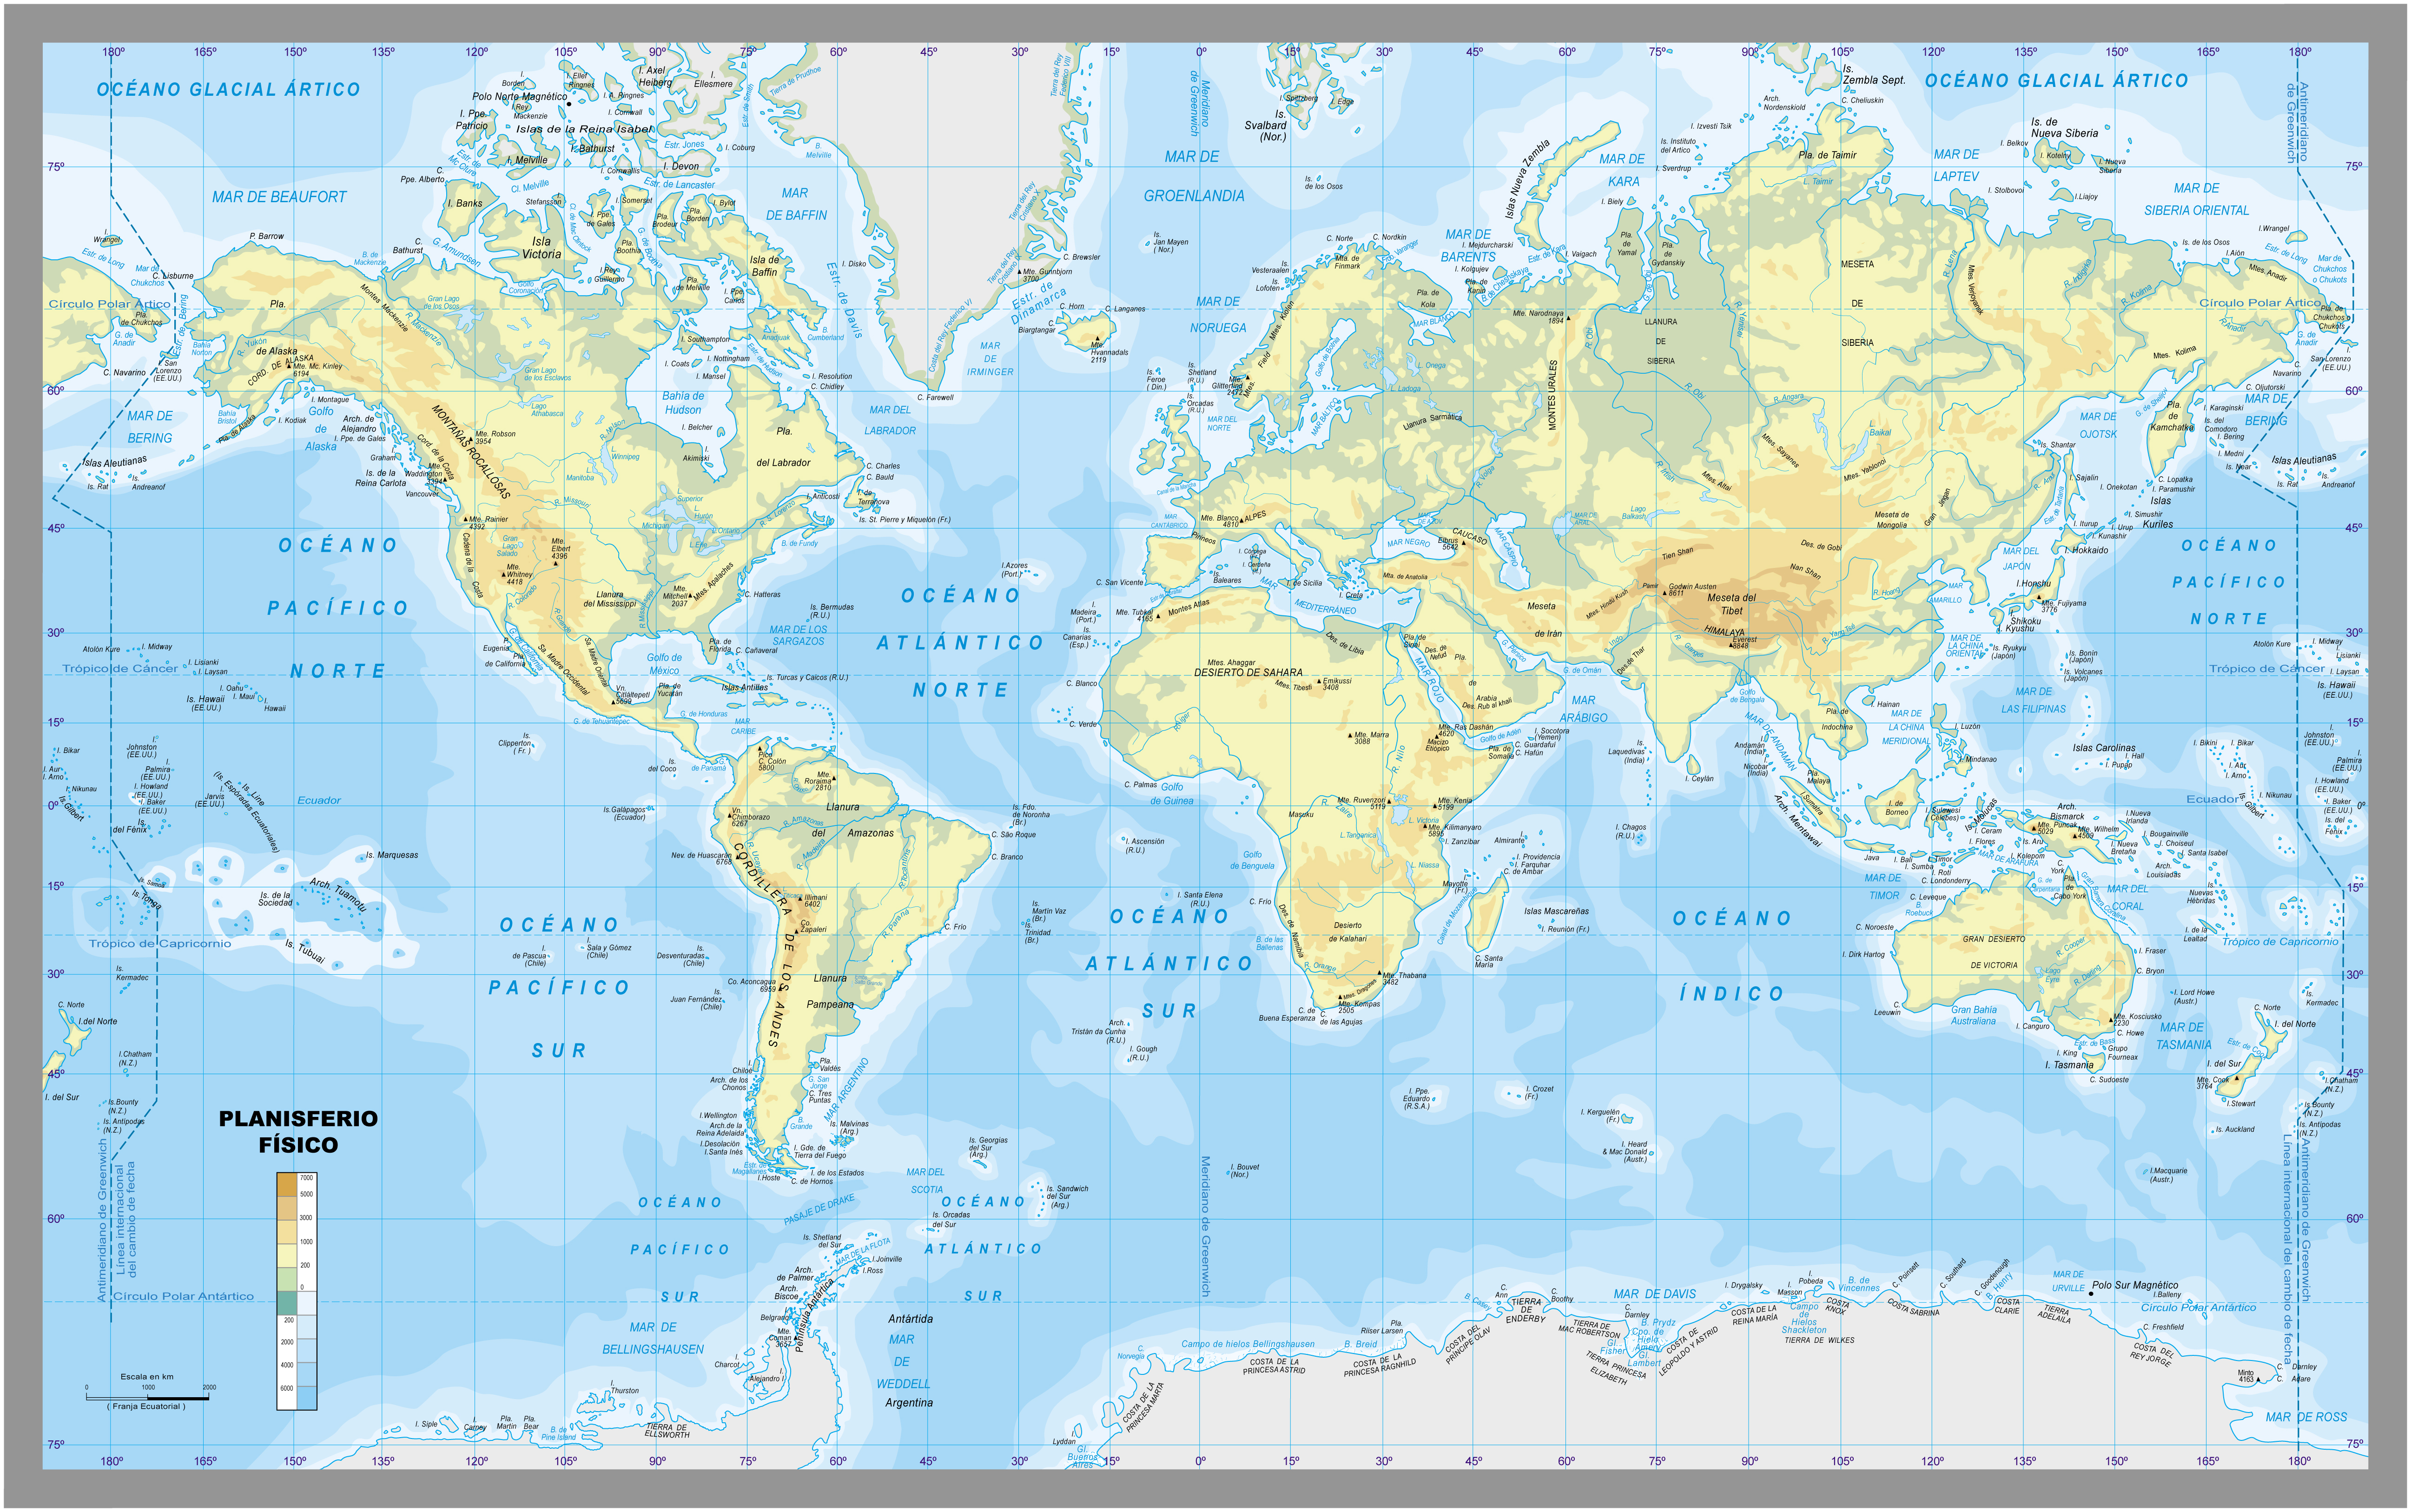 25 Unico Mapa Planisferio Fisico Politico 3703